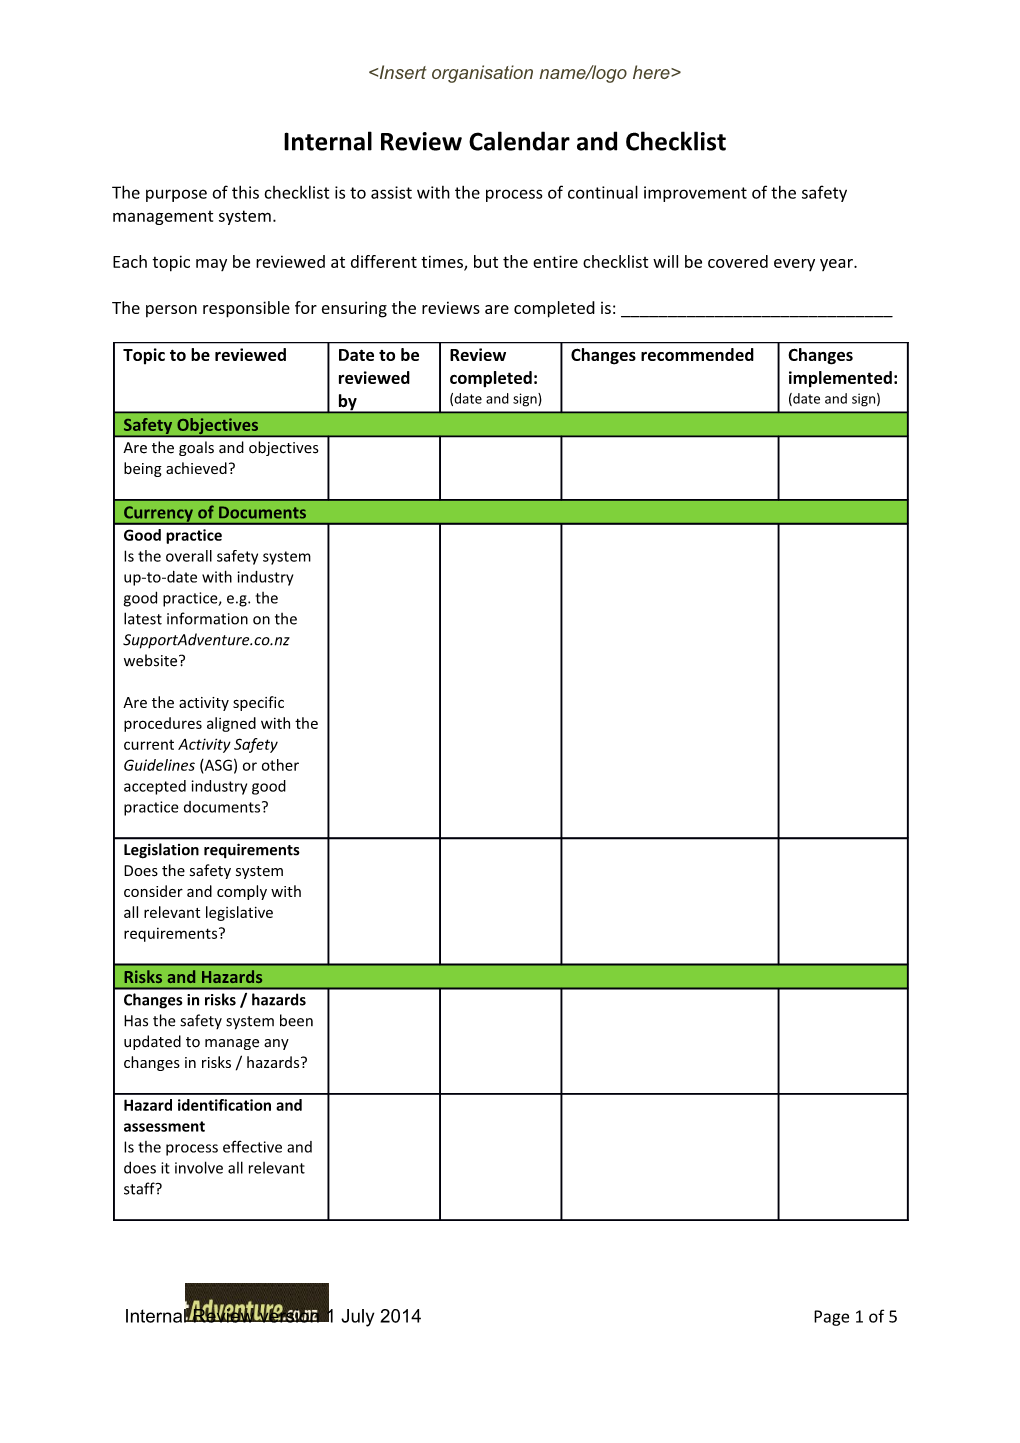 Internal Review Calendar and Checklist